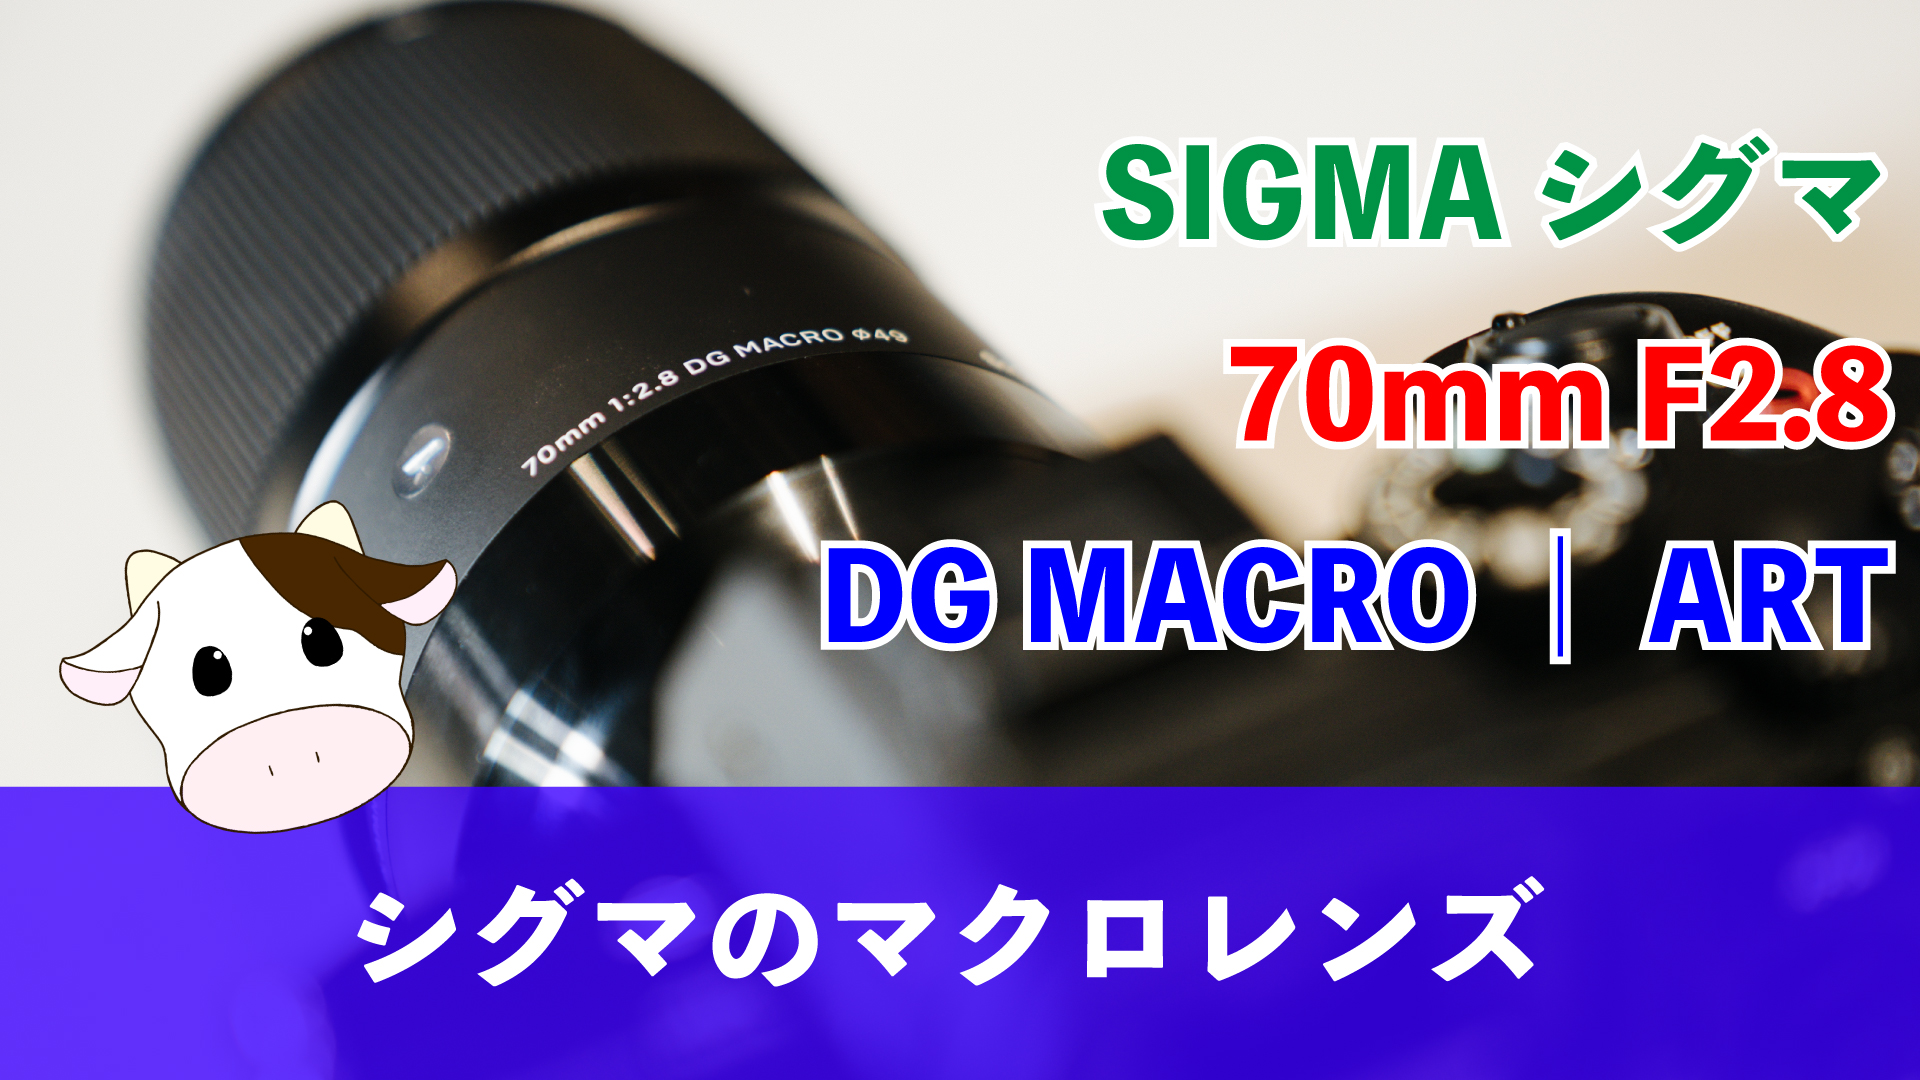 SIGMA 70mm F2.8 DG MACRO | Art を買ってみた・使ってみた【オススメ 